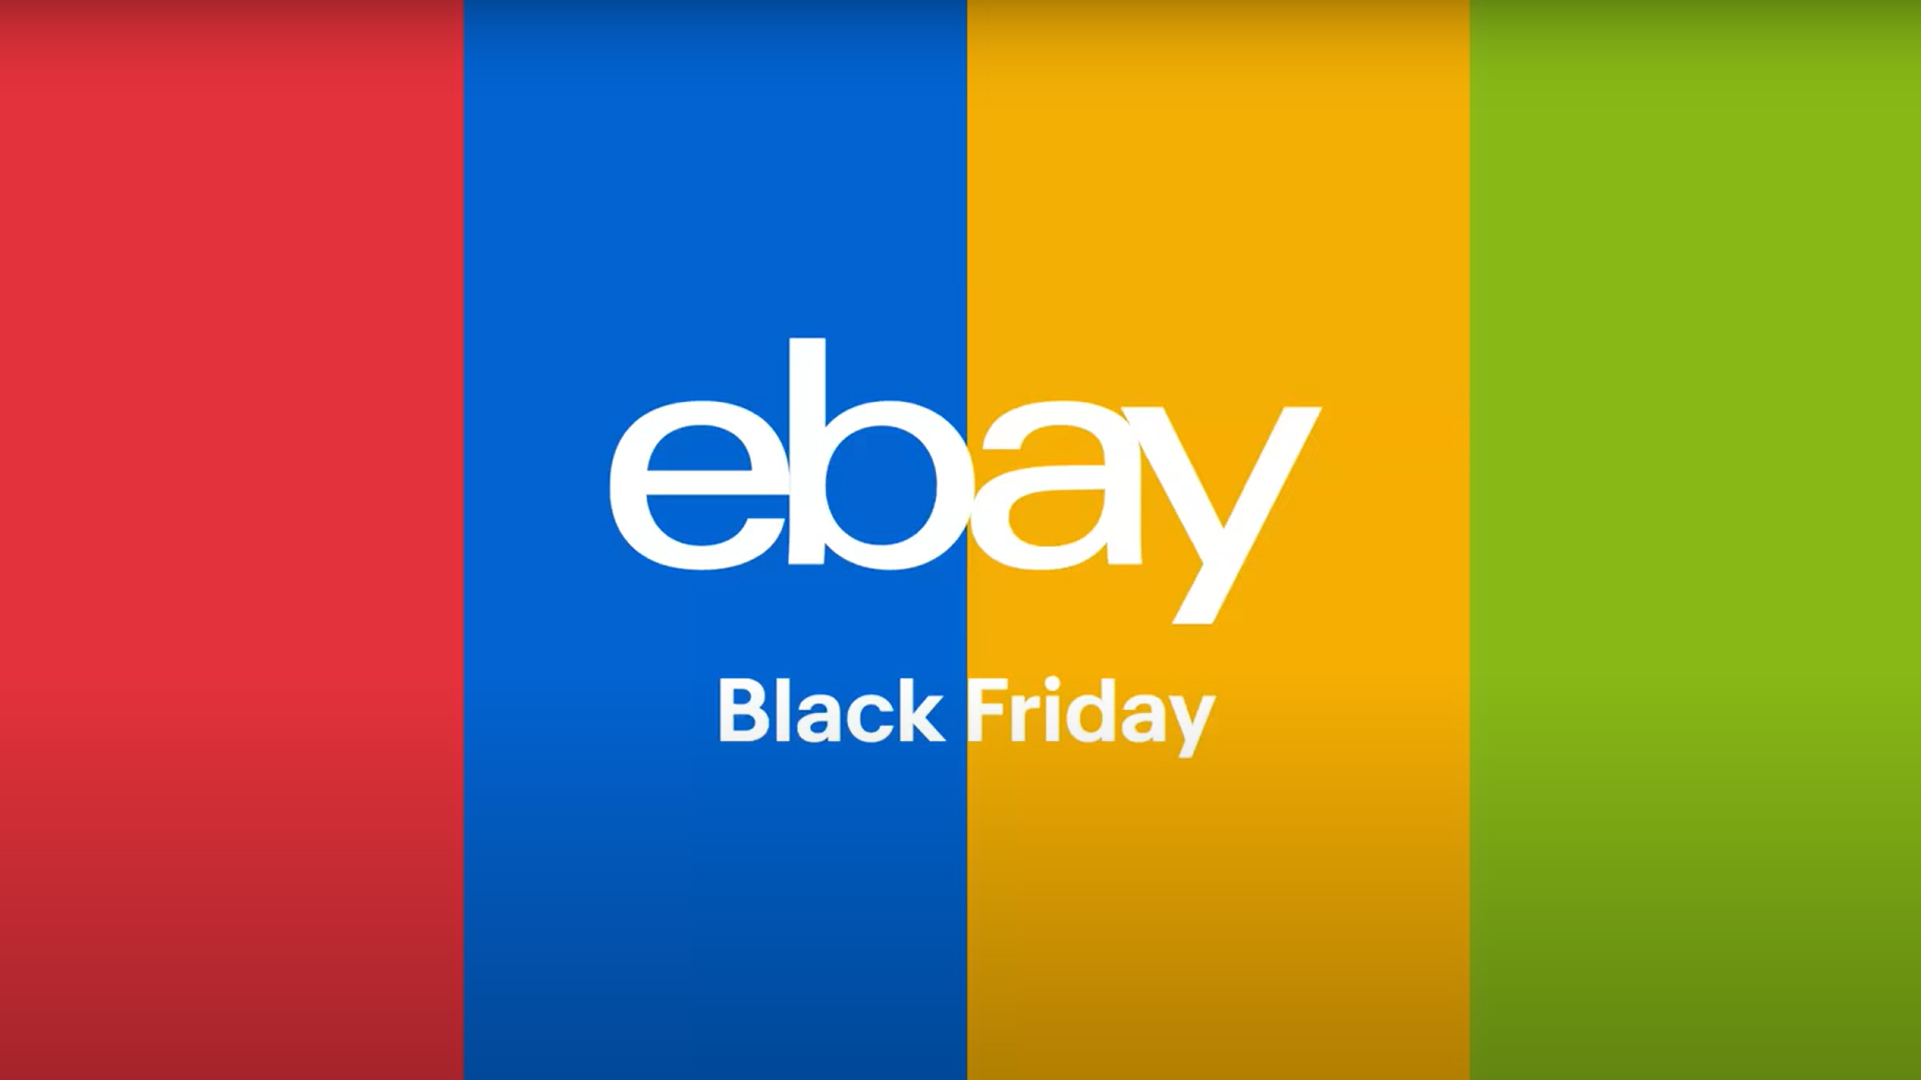 eBay startet “Better than New” Kampagne zum Black Friday